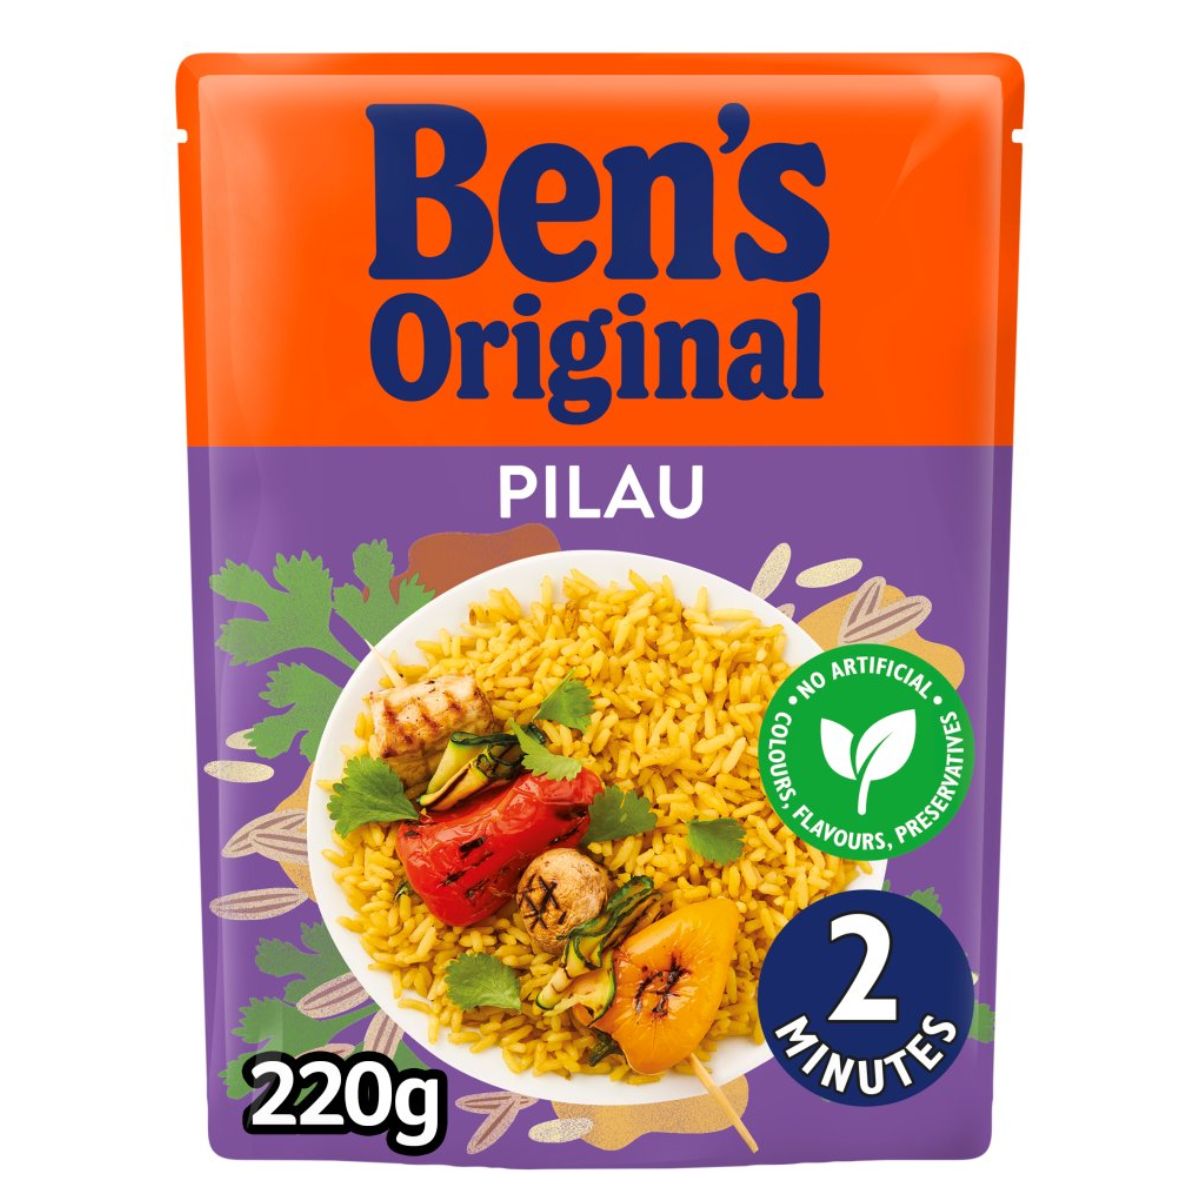 Ben's Original - Pilau Microwave Rice - 220g.